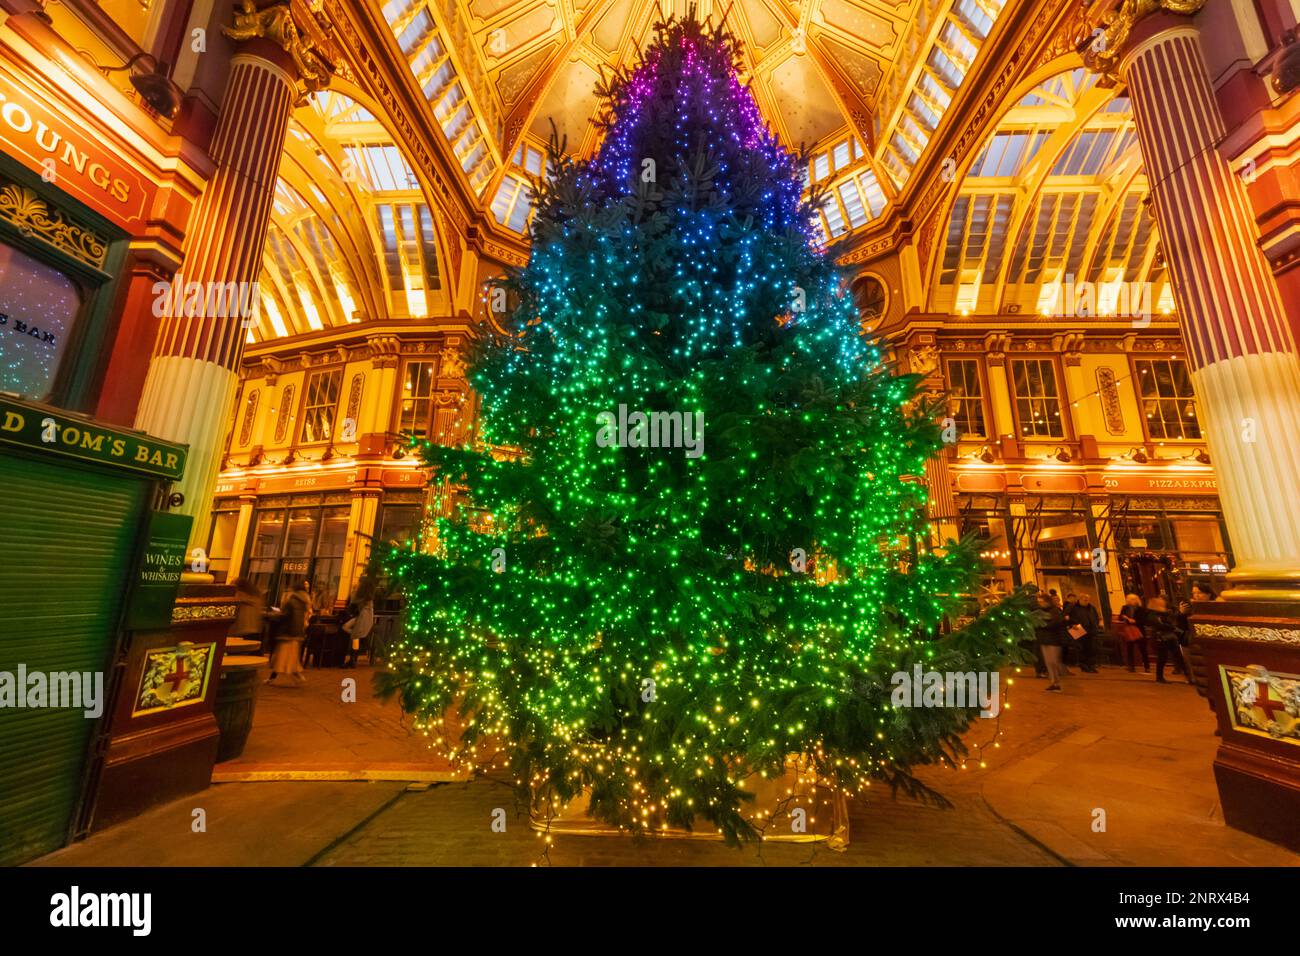 Angleterre, Londres, la ville, Leadenhall Market, arbre de Noël Banque D'Images